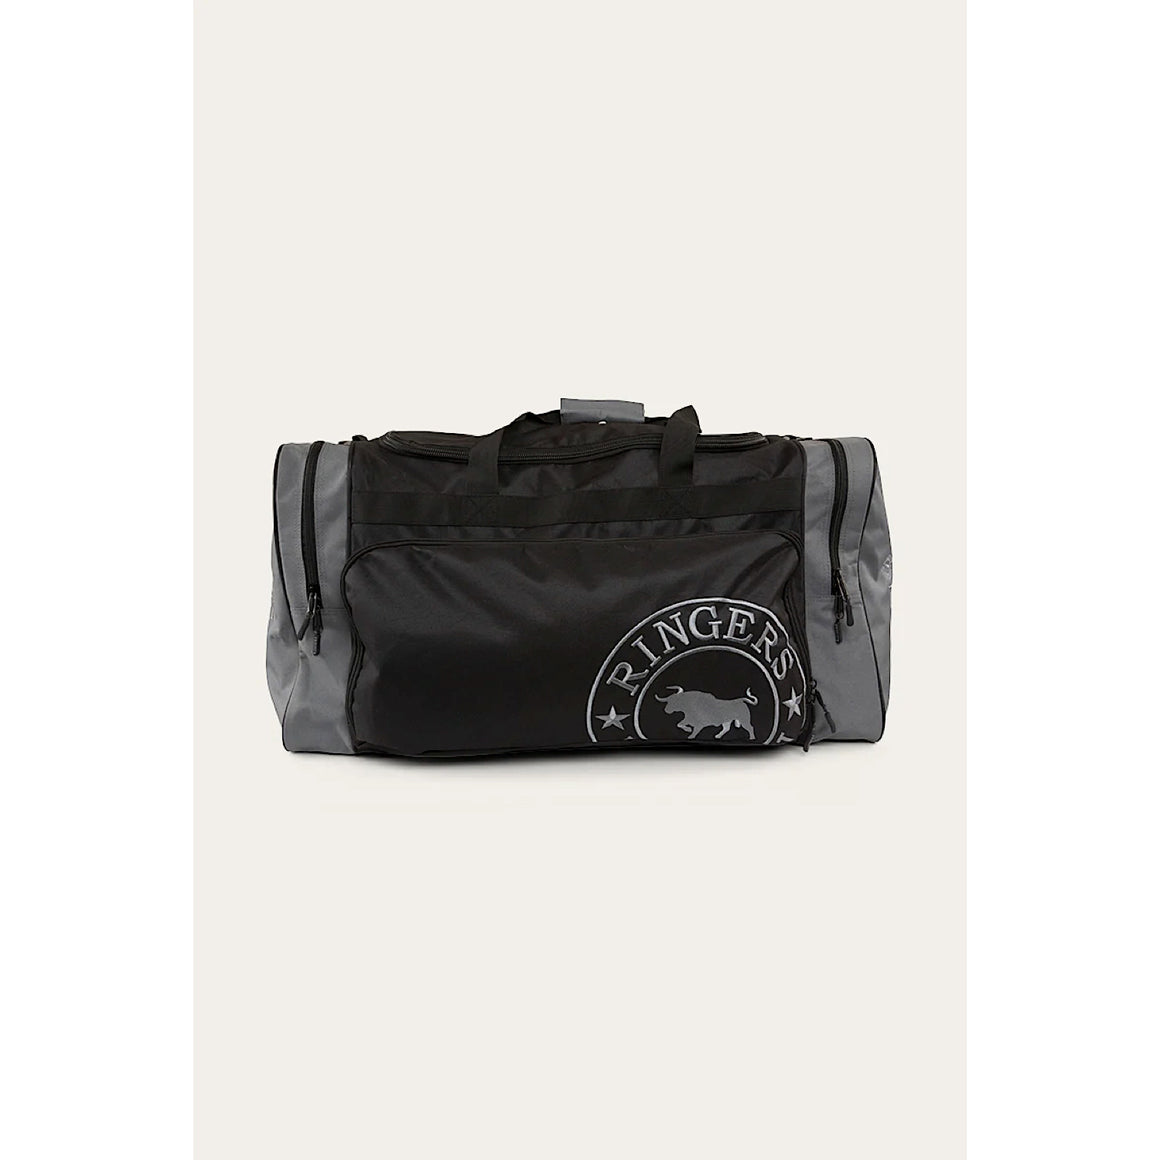 Ringers Western Rider Sports Bag Black/Charcoal